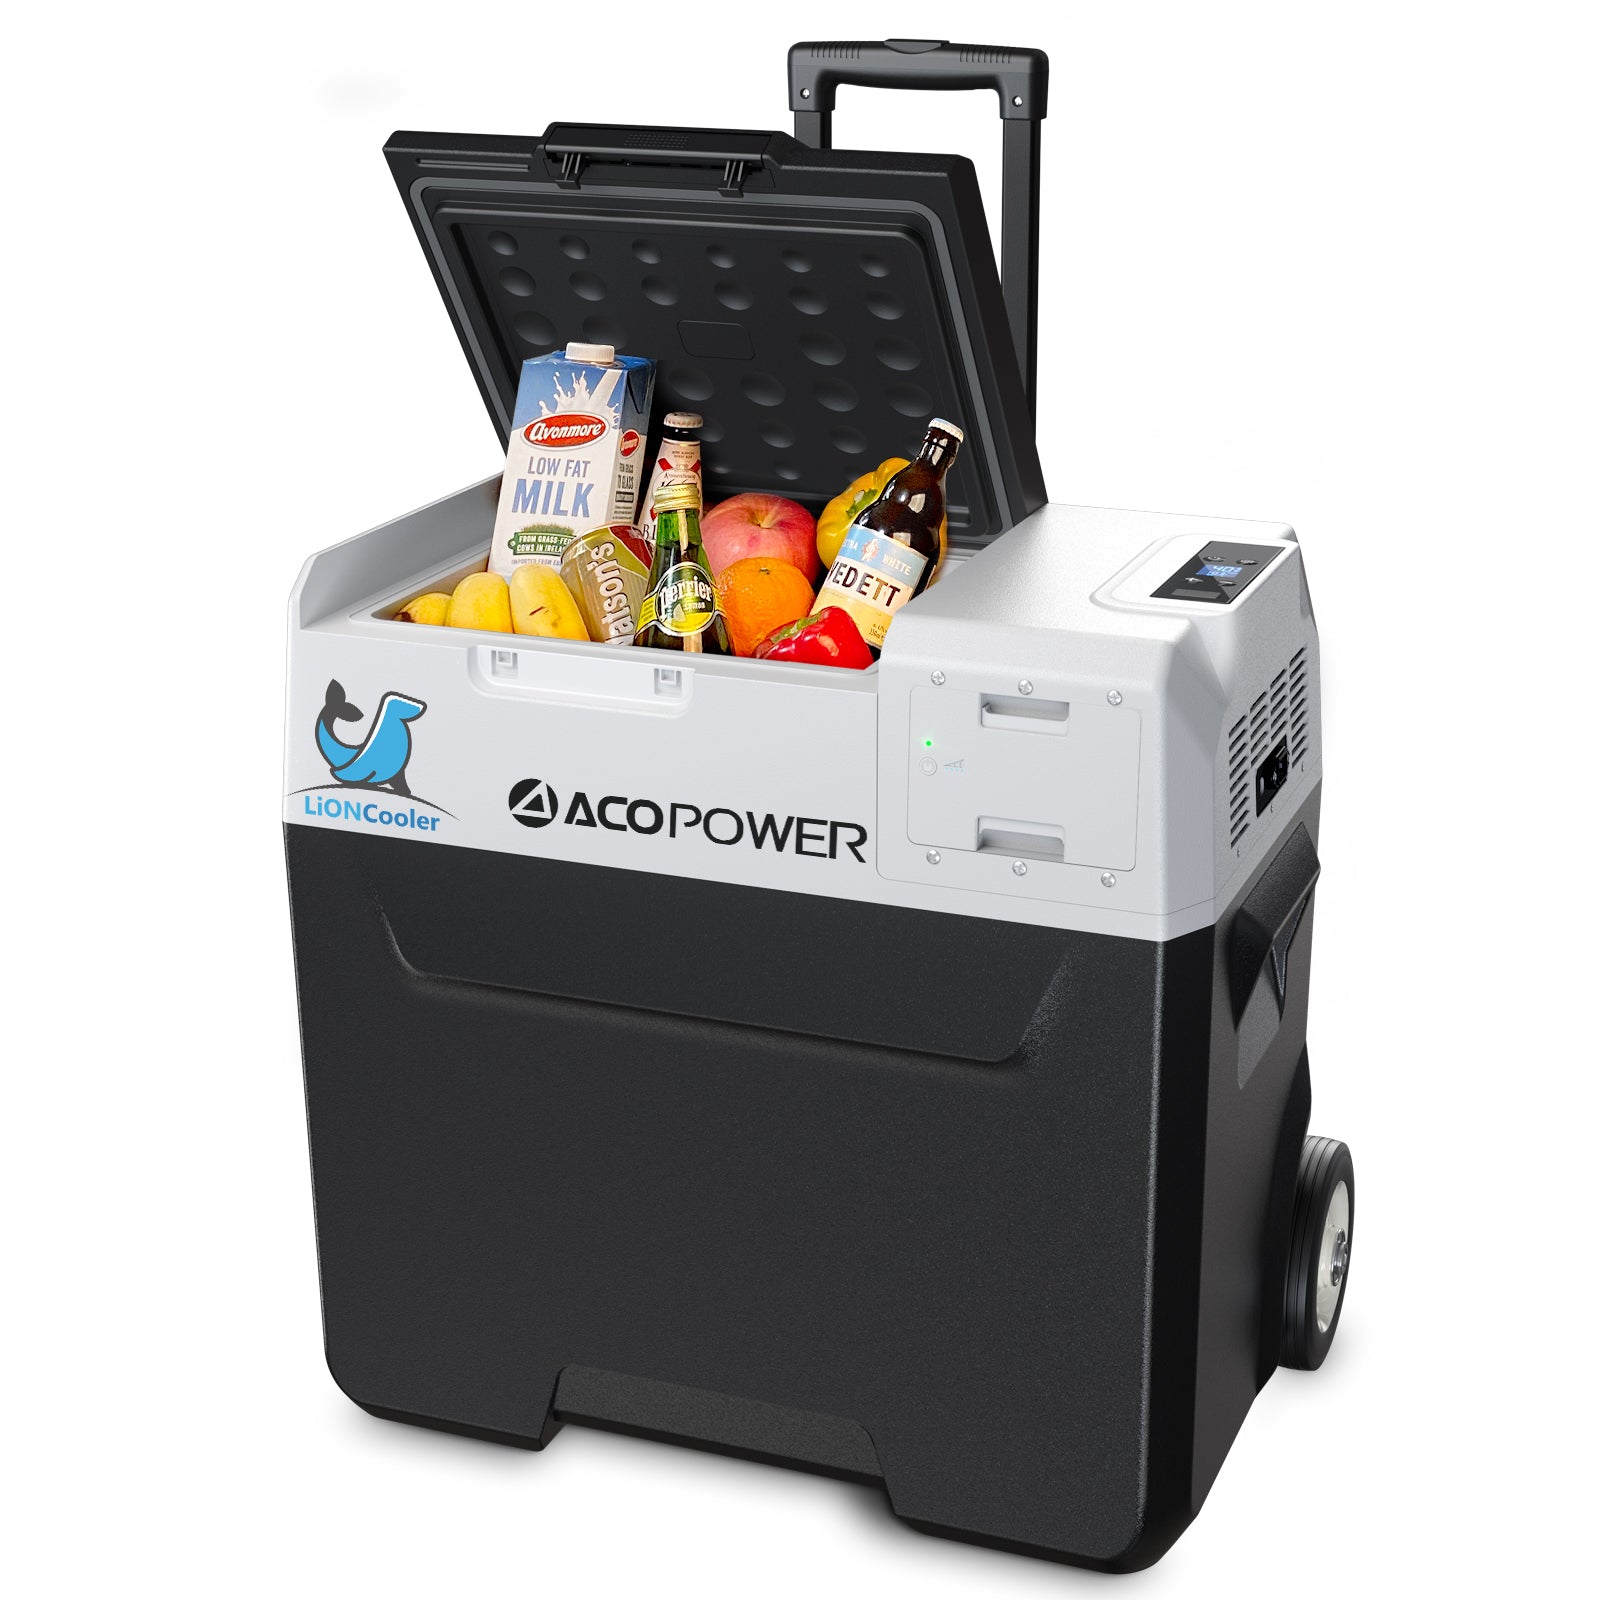 LiONCooler X50A Battery Powered Fridge Freezer Cooler by ACOPower – ACOPOWER